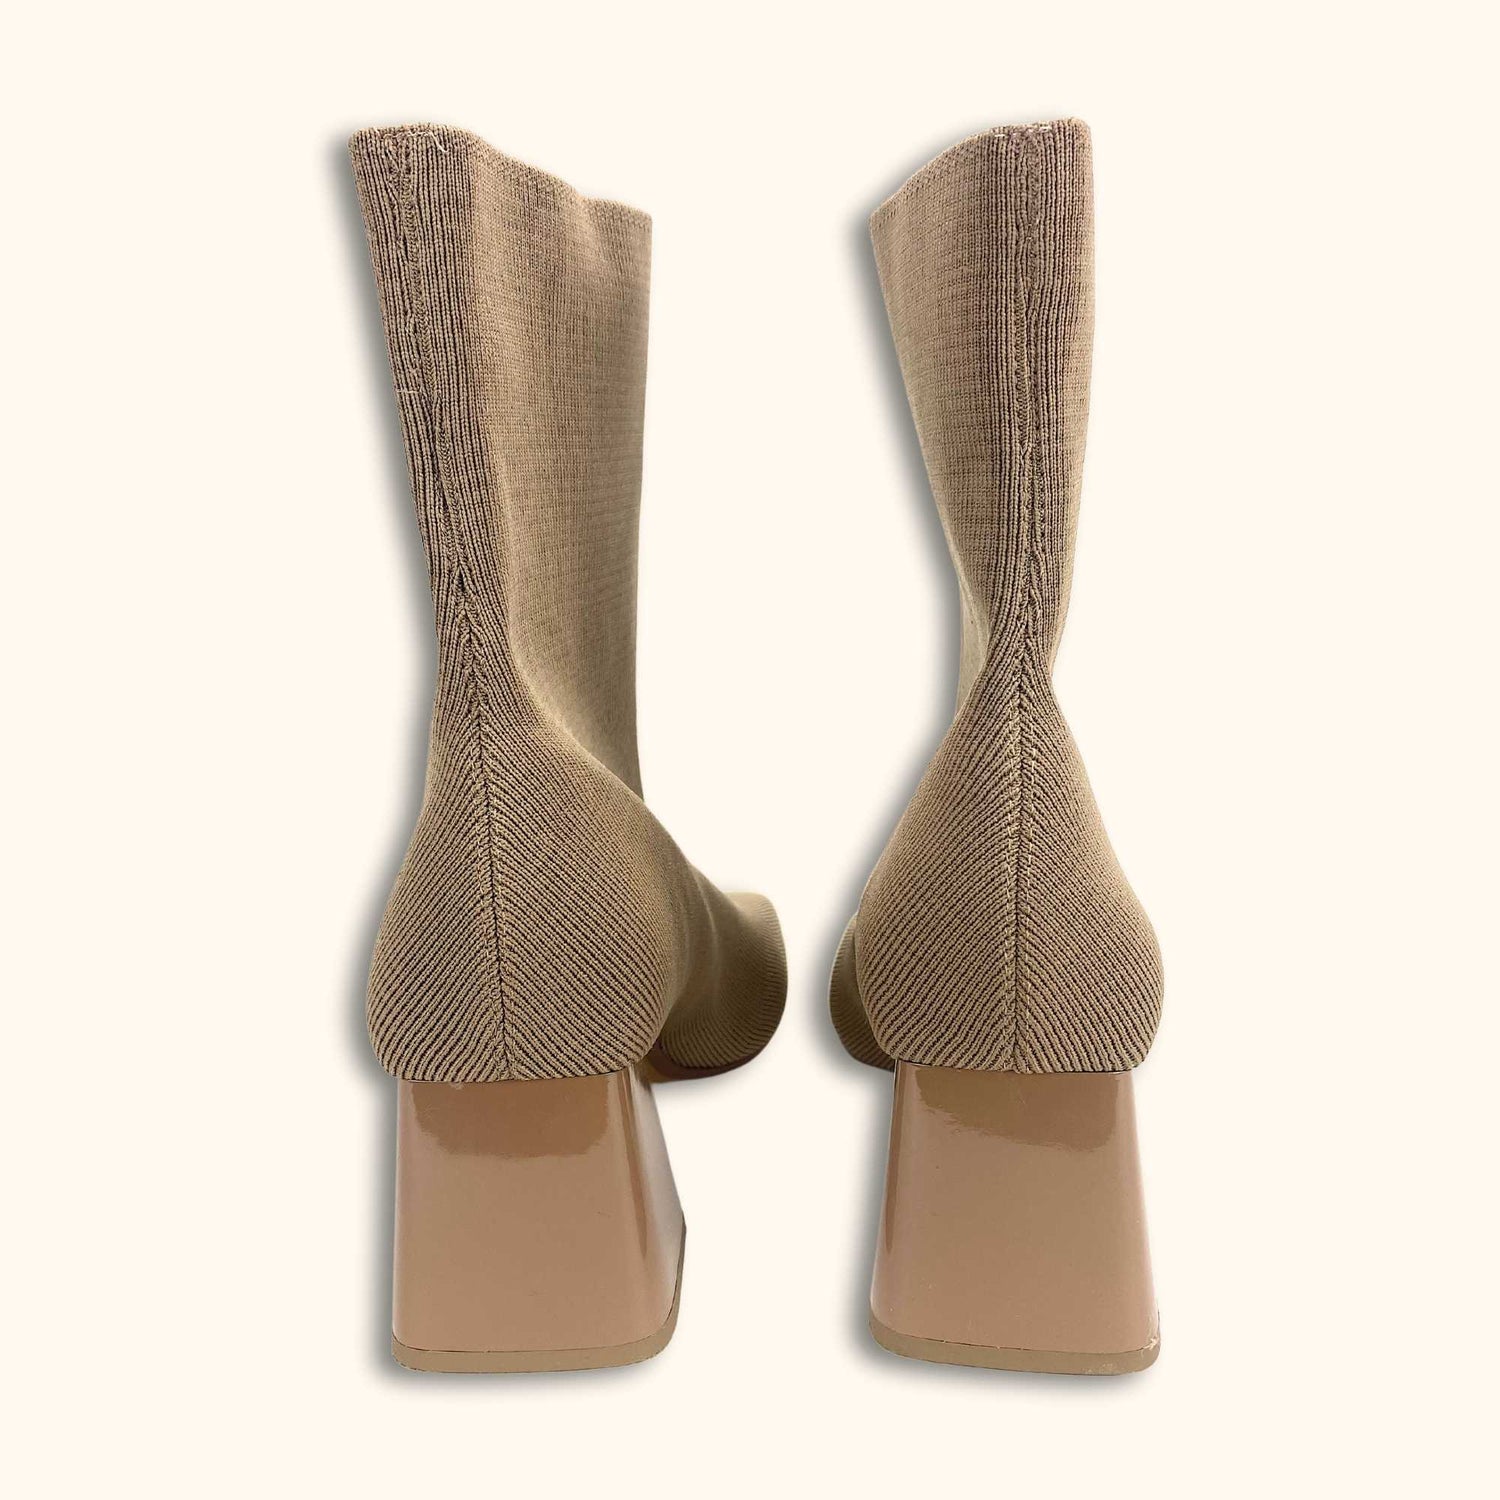 Zara Beige Heeled Ankle Boots - Size 5 - Zara - Boots